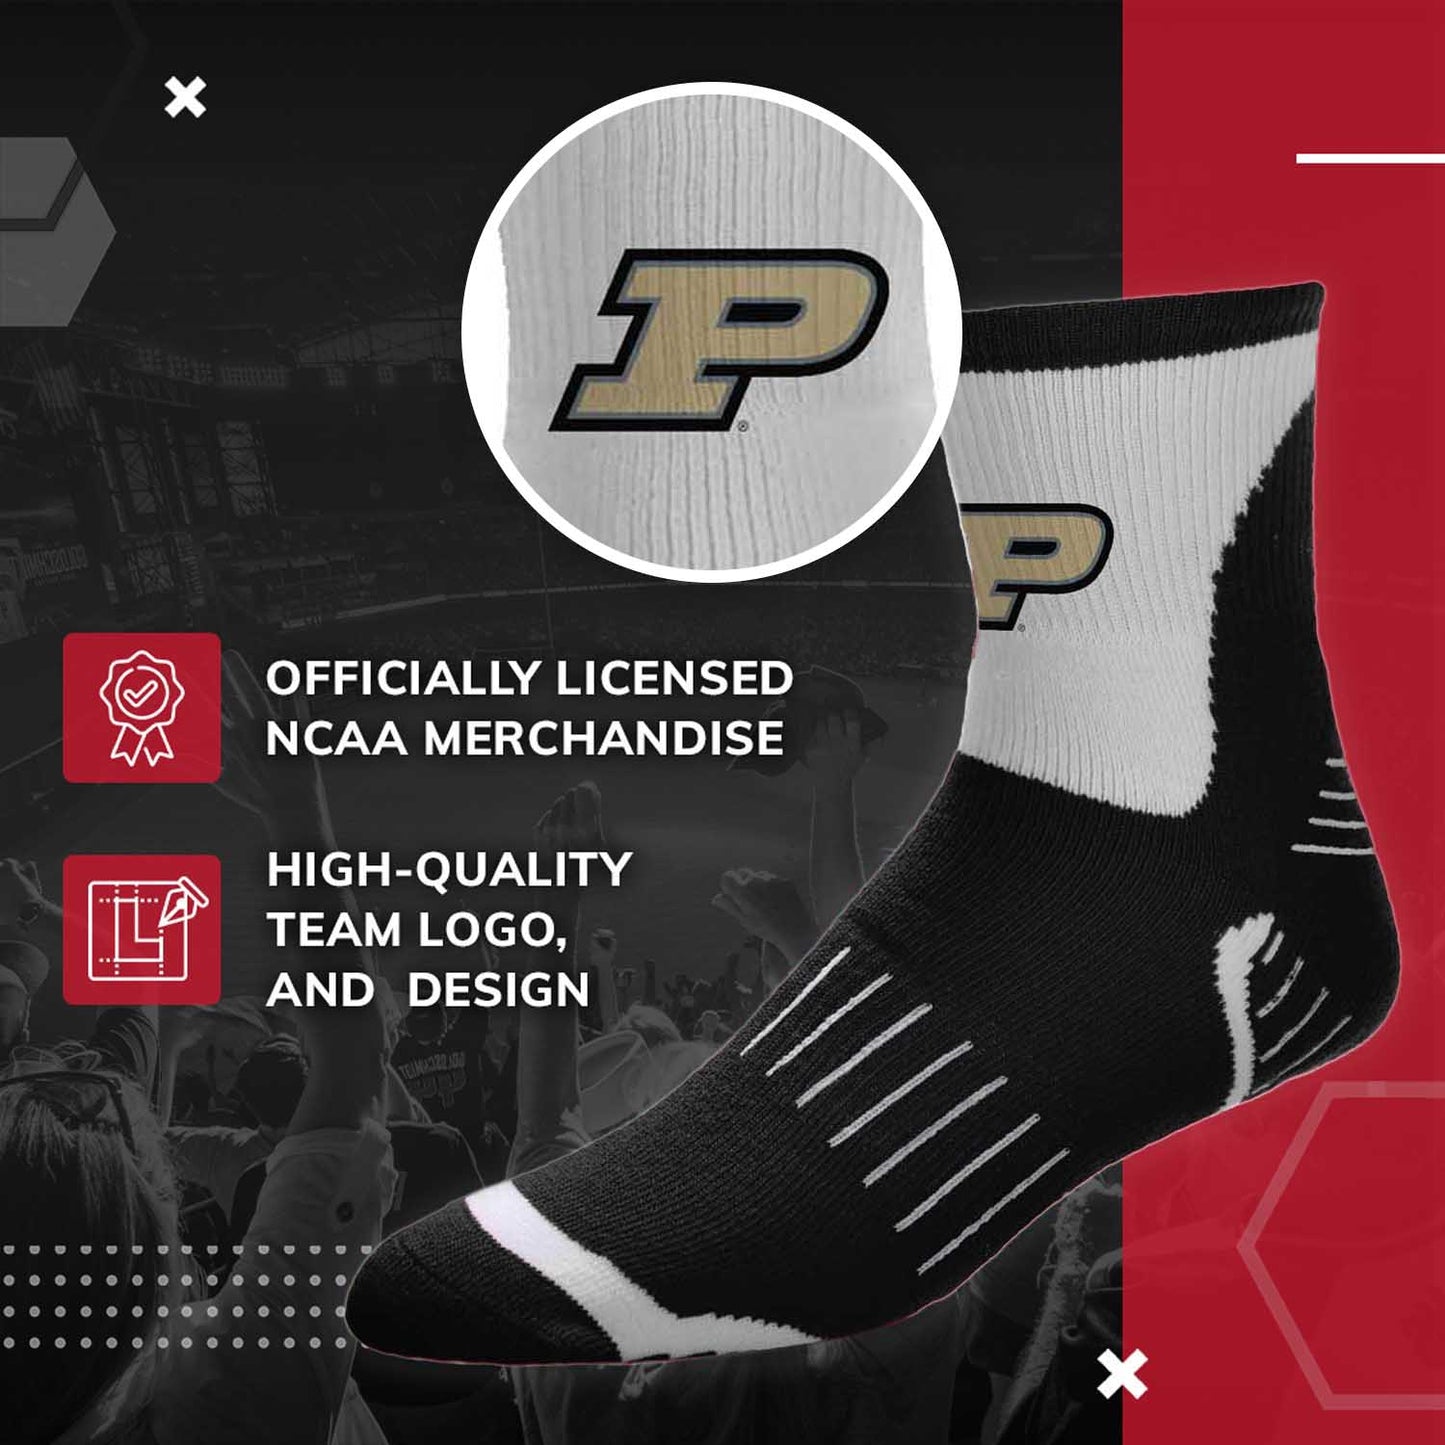 Purdue Boilermakers Adult NCAA Surge Quarter Length Crew Socks - Black